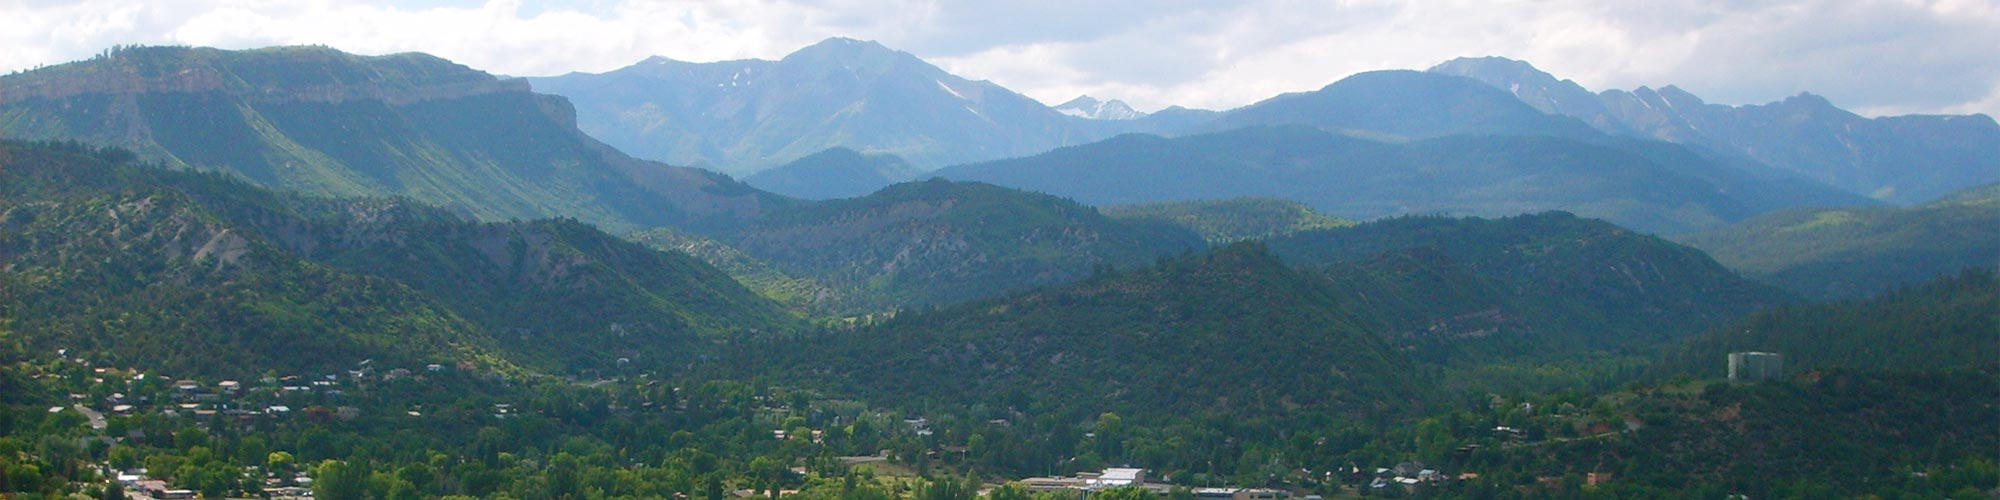 Non-Profit Services in Durango, Colorado